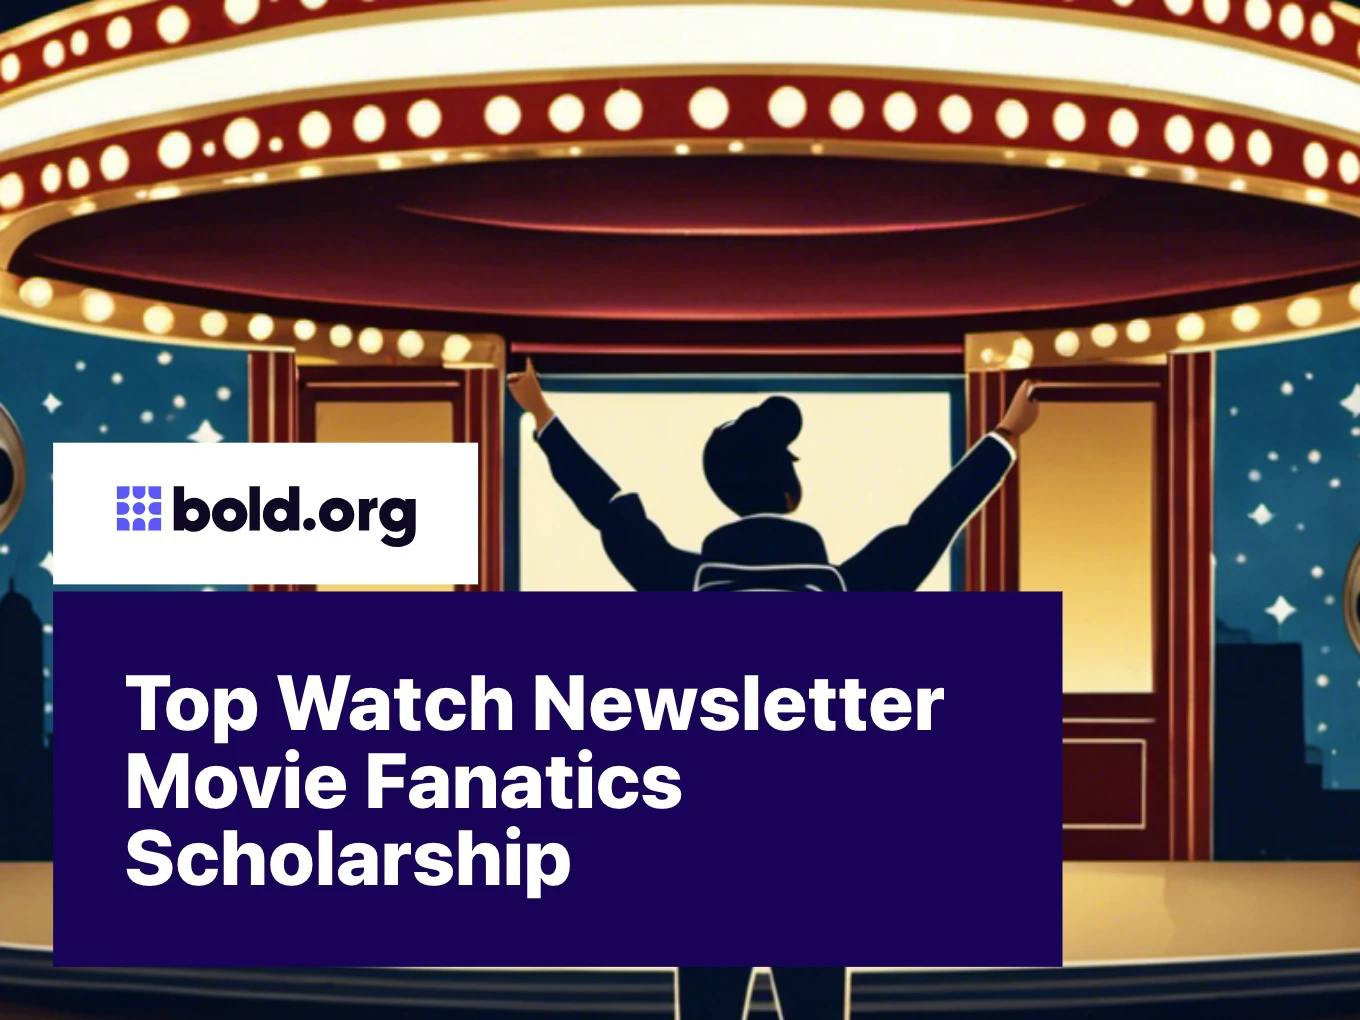 Top Watch Newsletter Movie Fanatics Scholarship